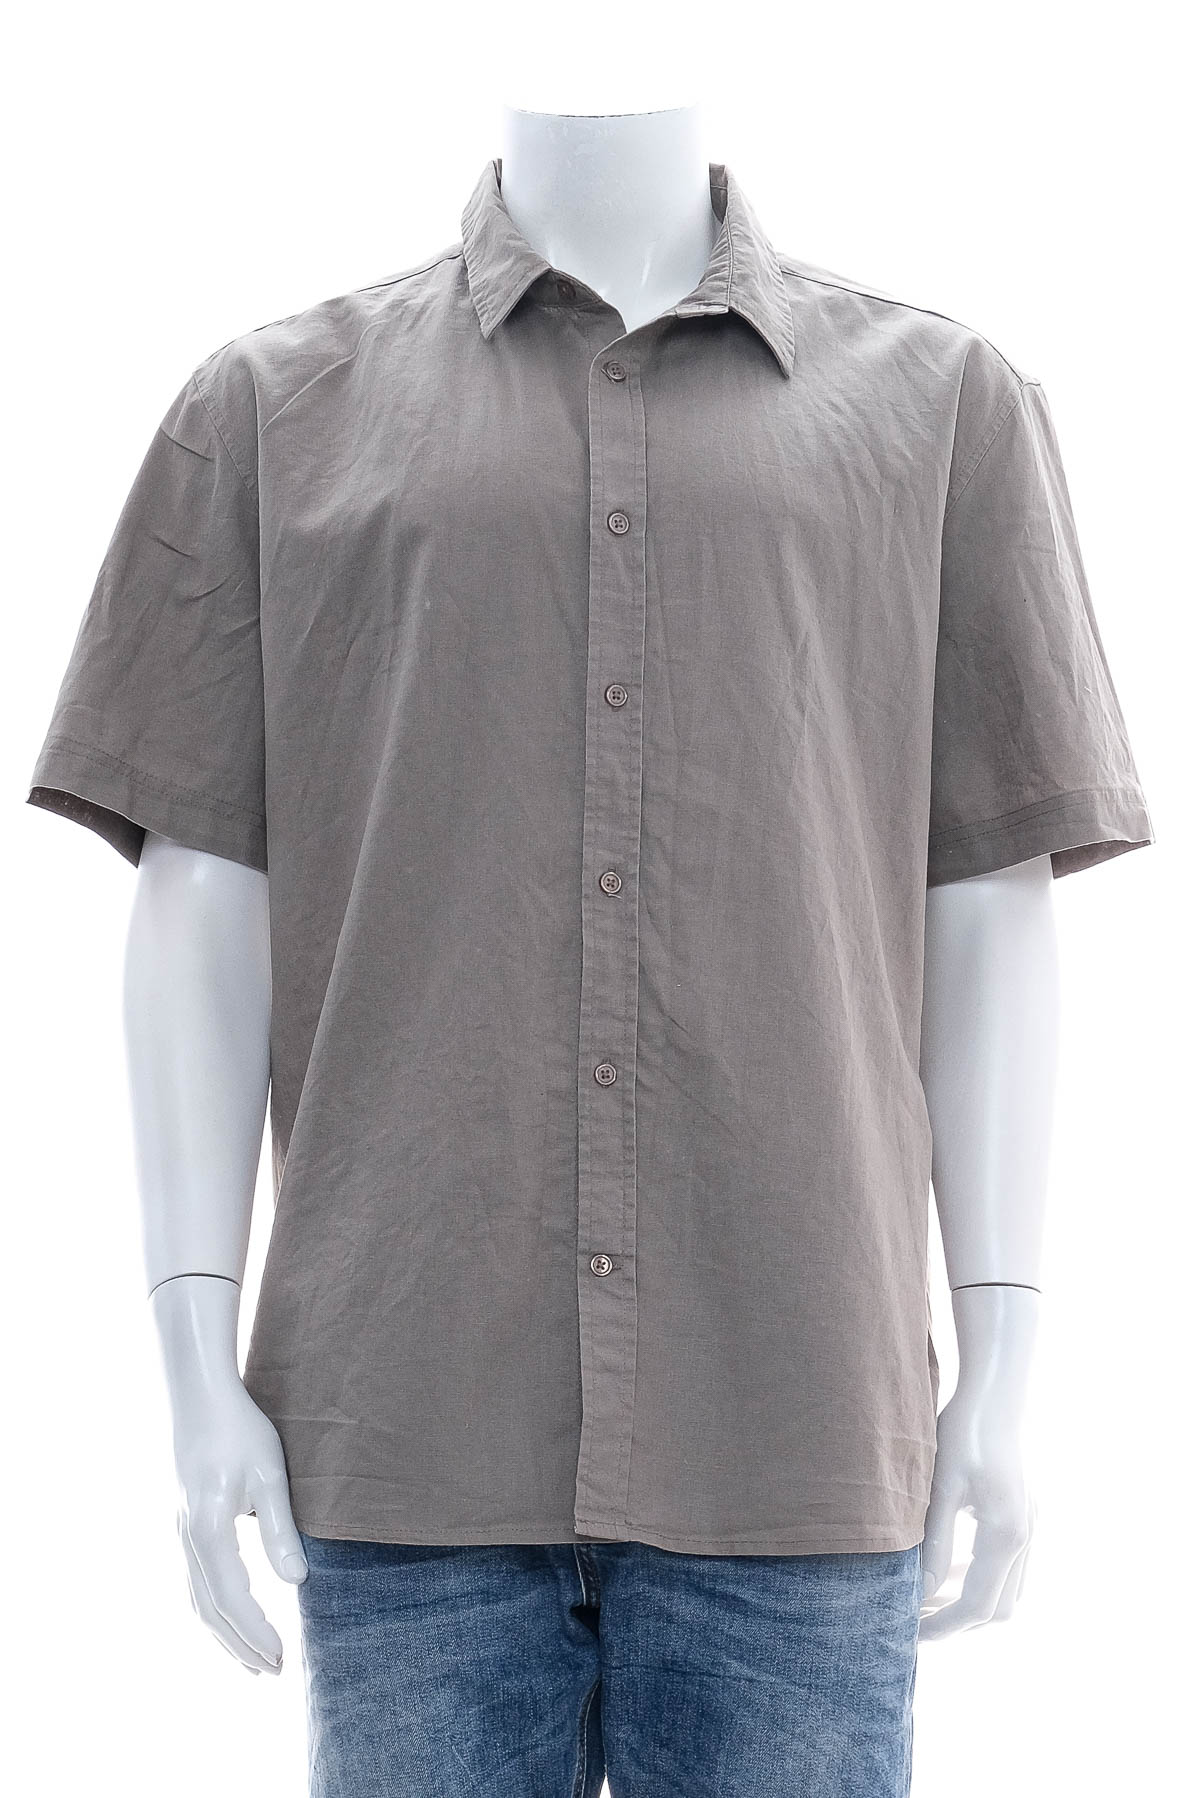 Men's shirt - Bpc Bonprix Collection - 0